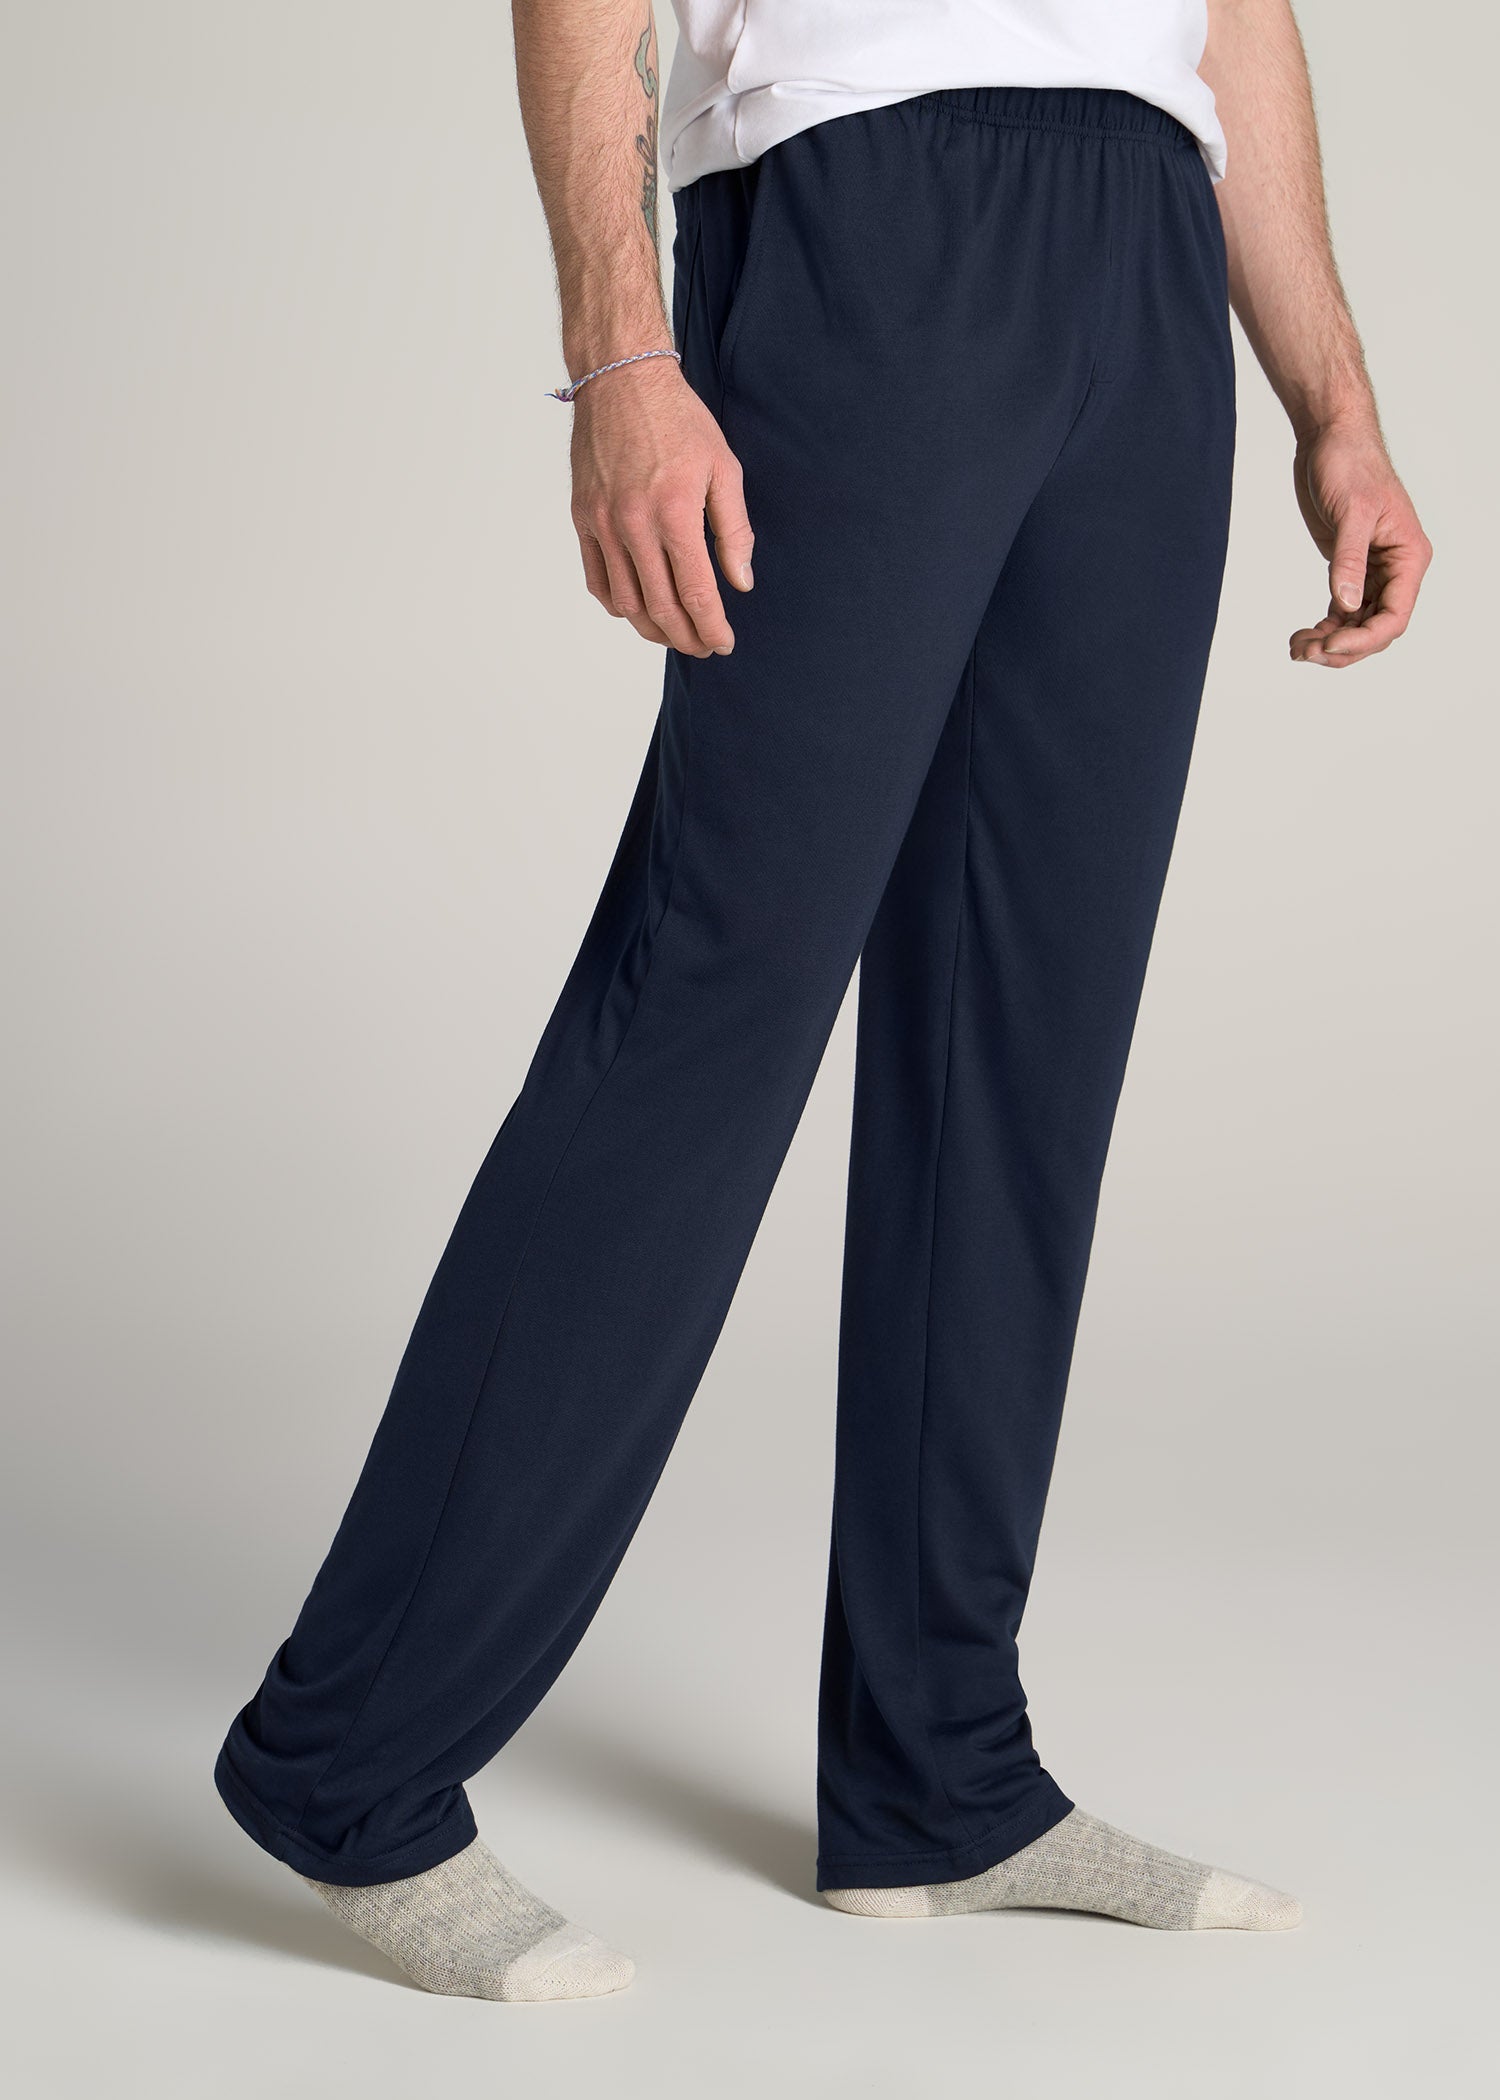 Lounge Pajama Pants for Tall Men  American Tall